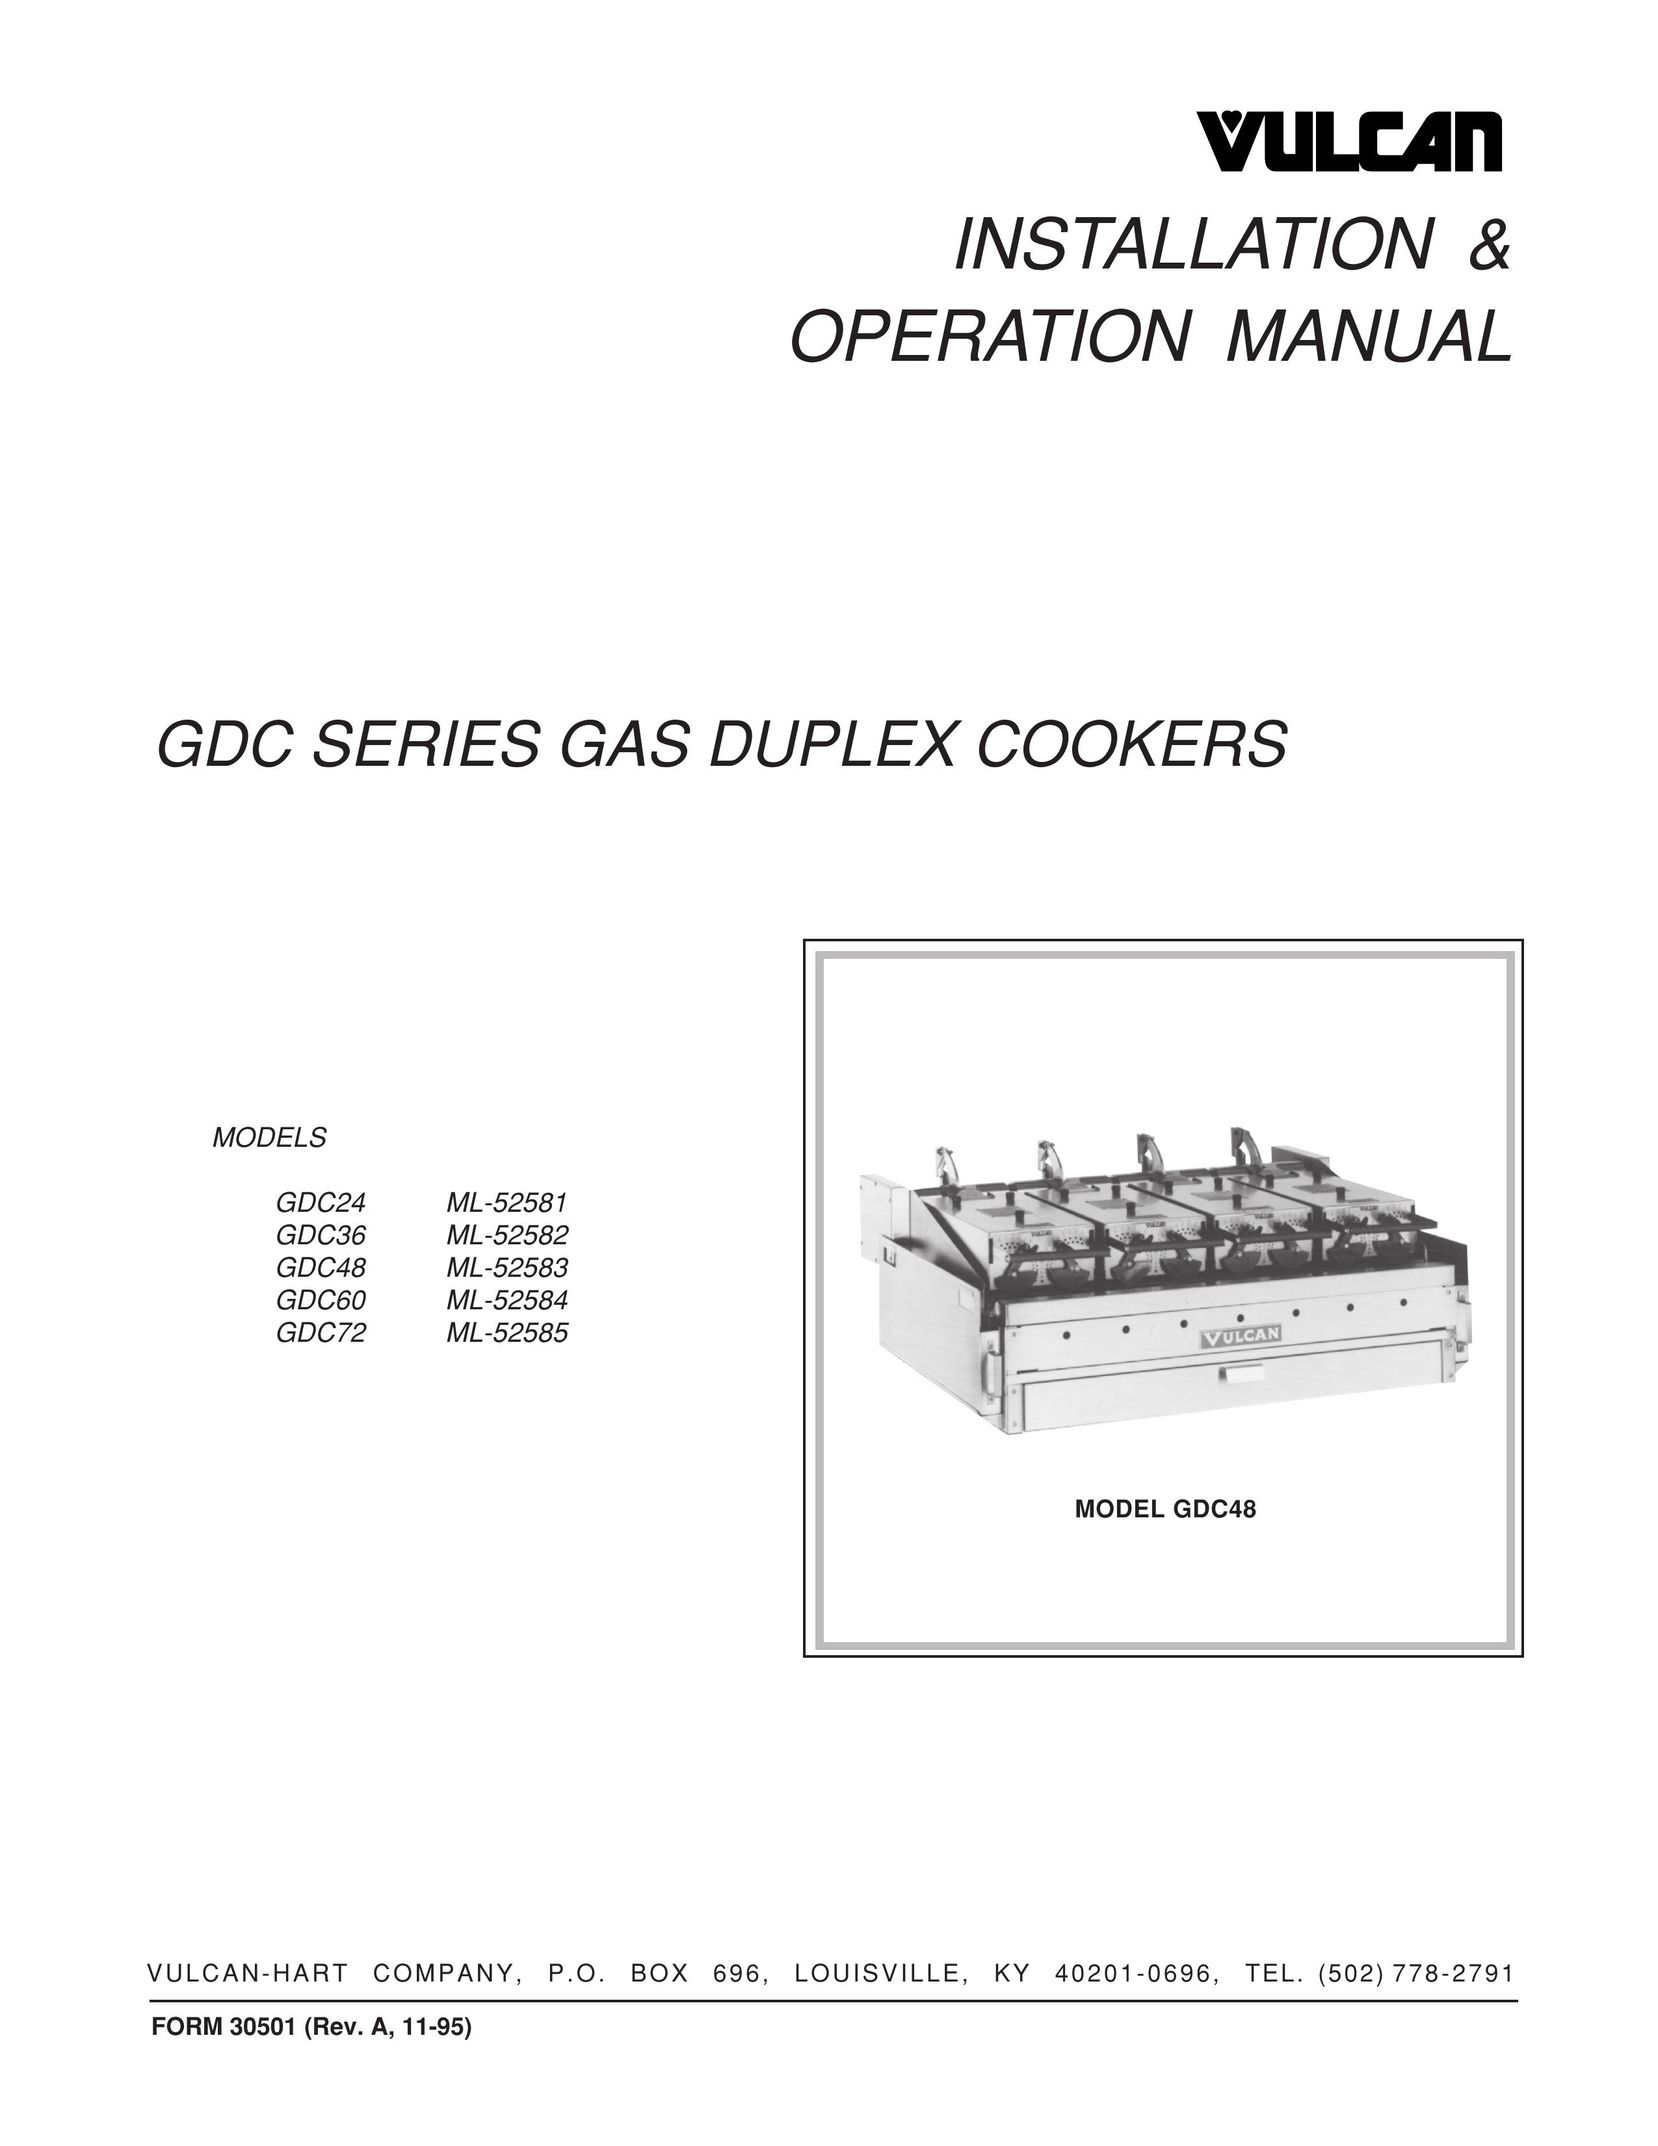 Vulcan-Hart GDC72 ML-52585 Cooktop User Manual